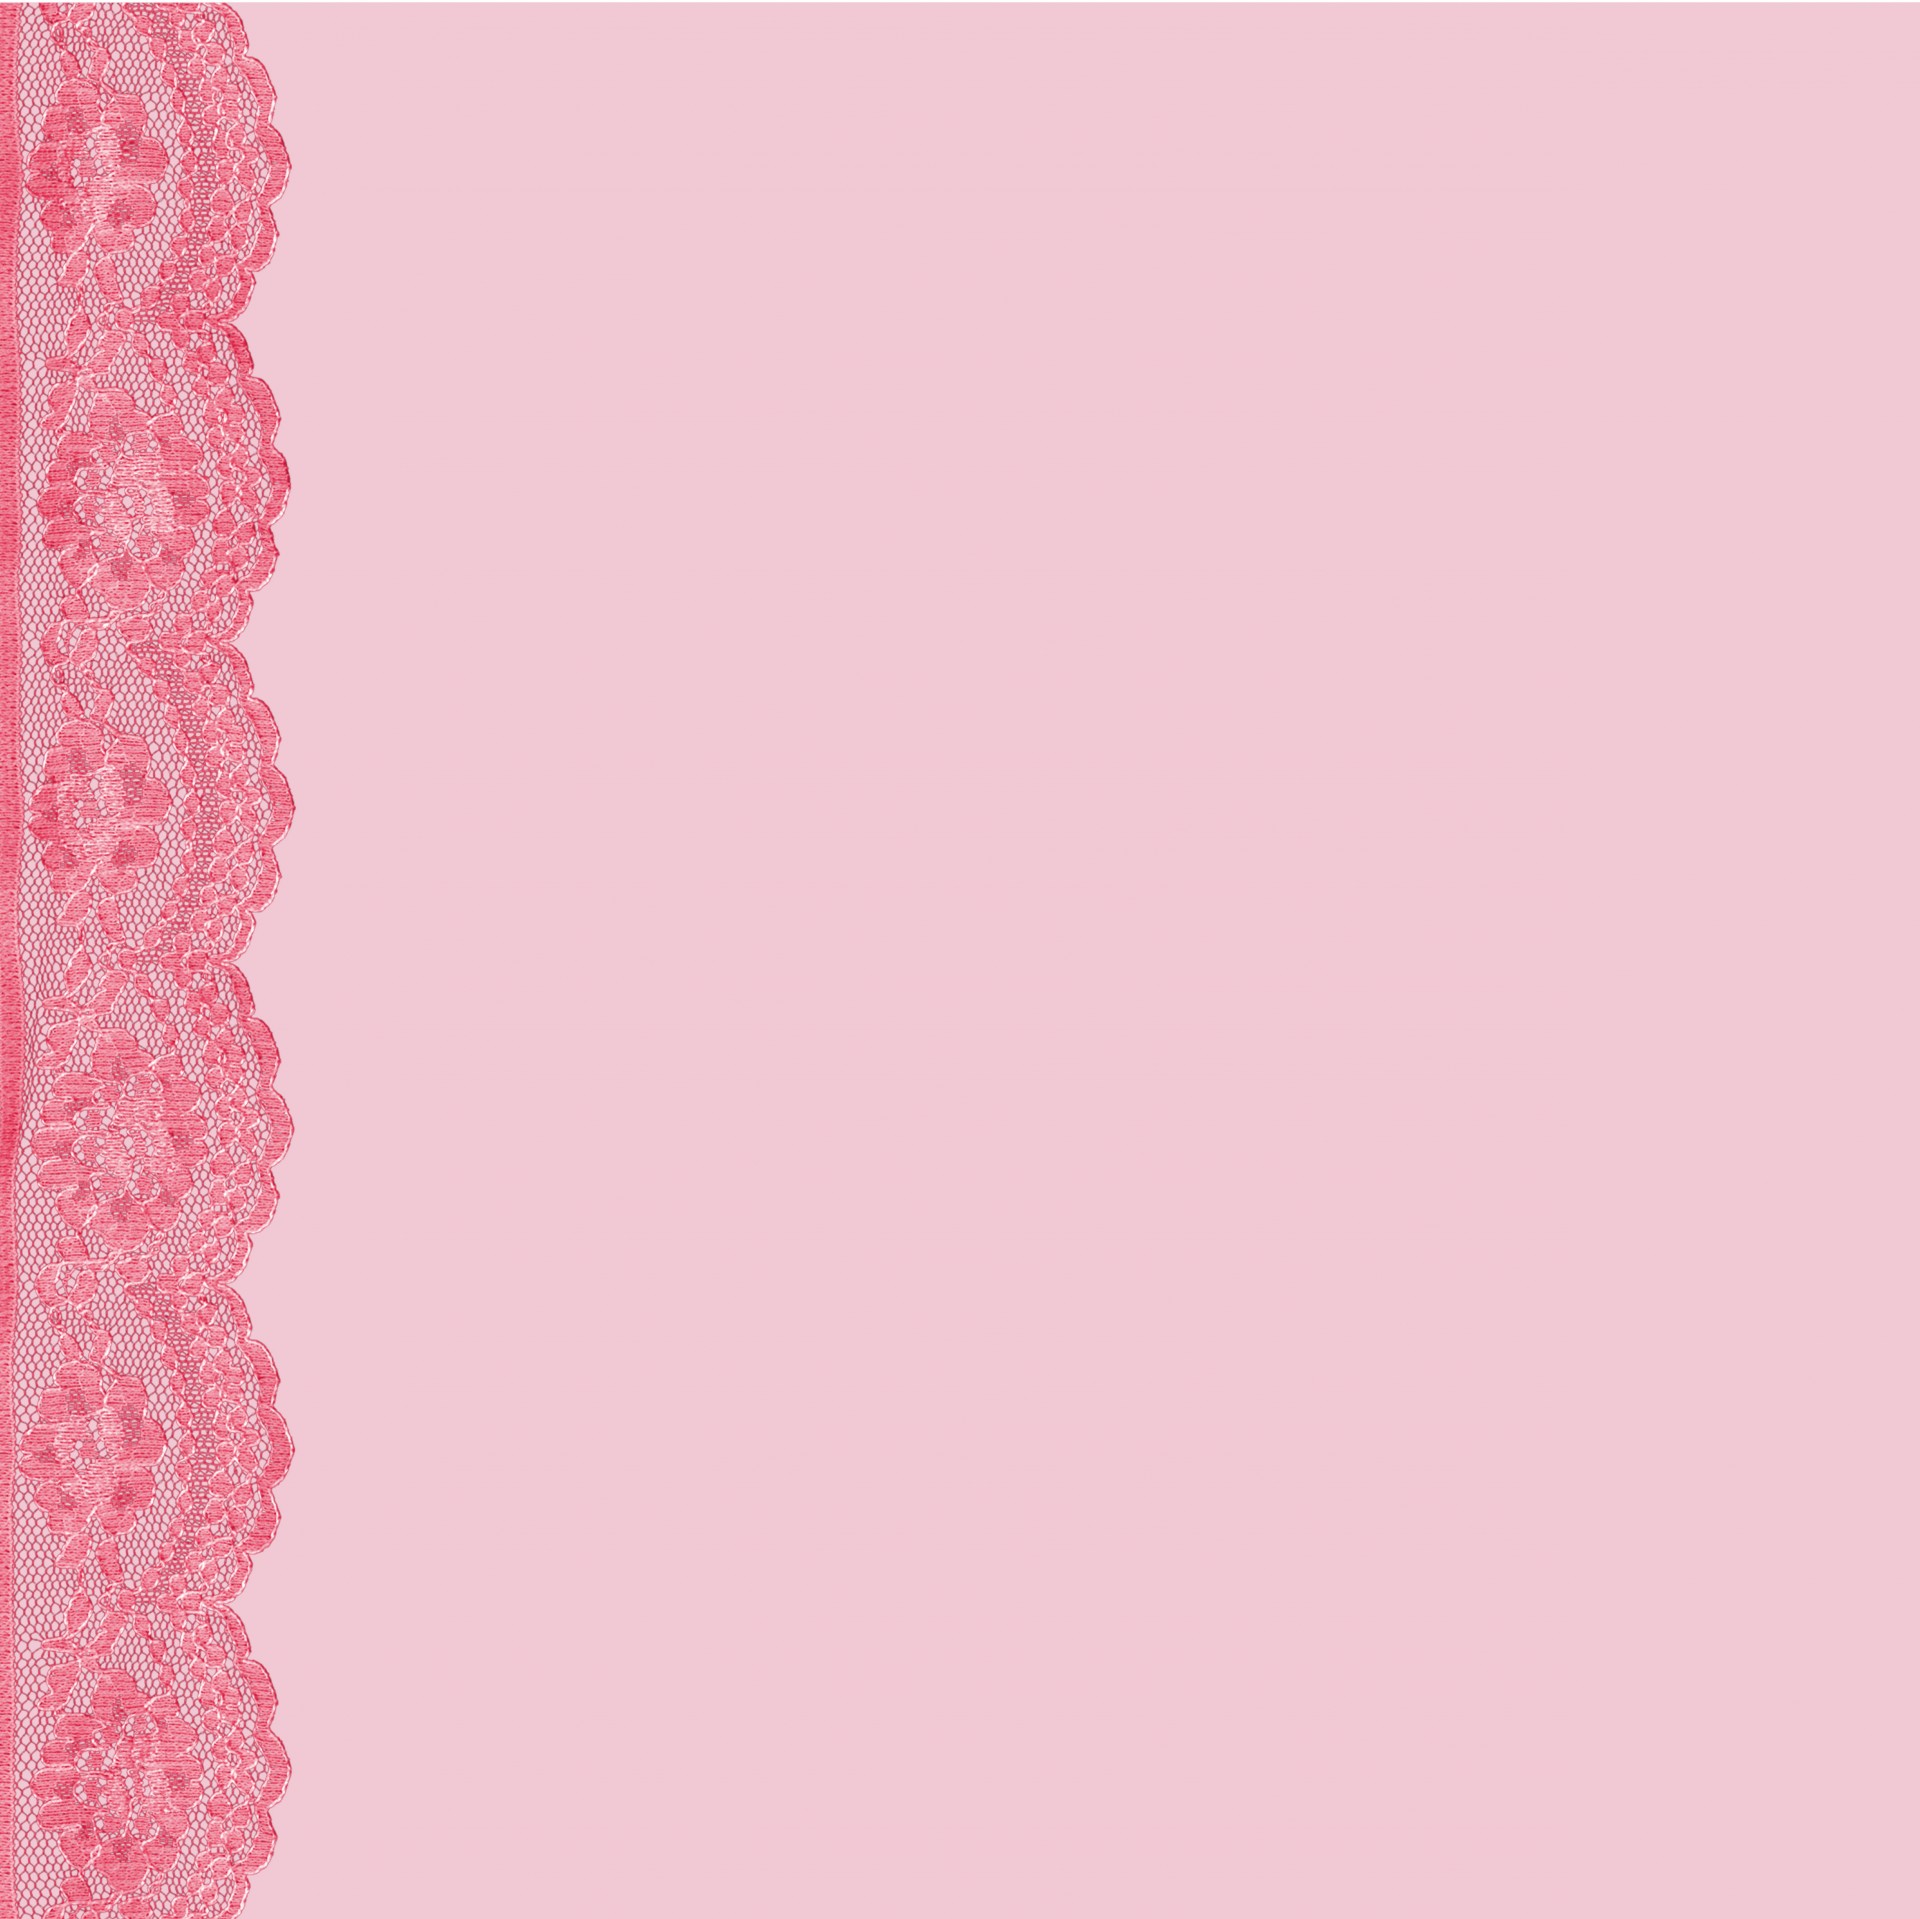 pink lace background free photo